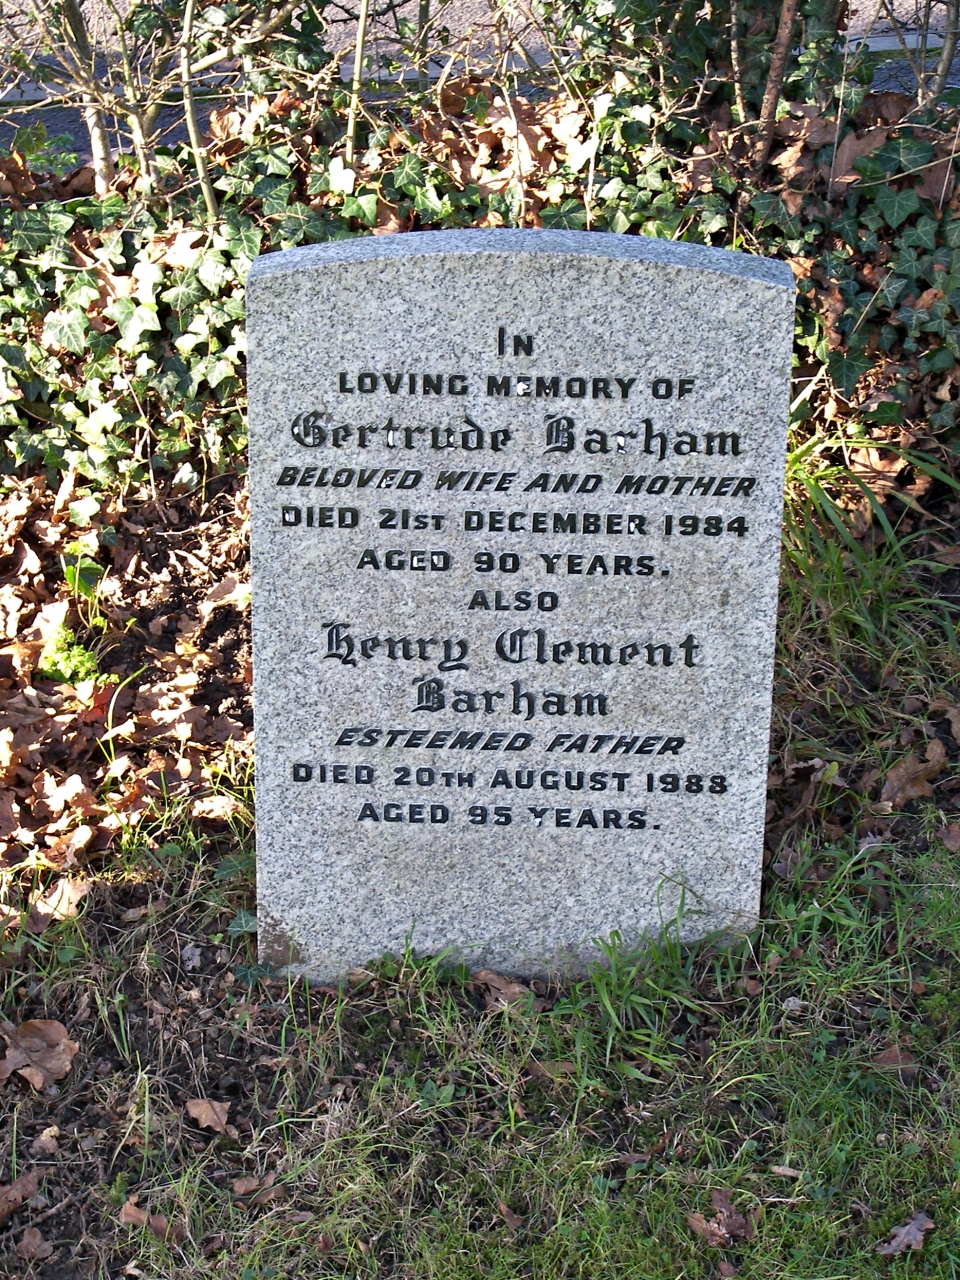 Barham grave